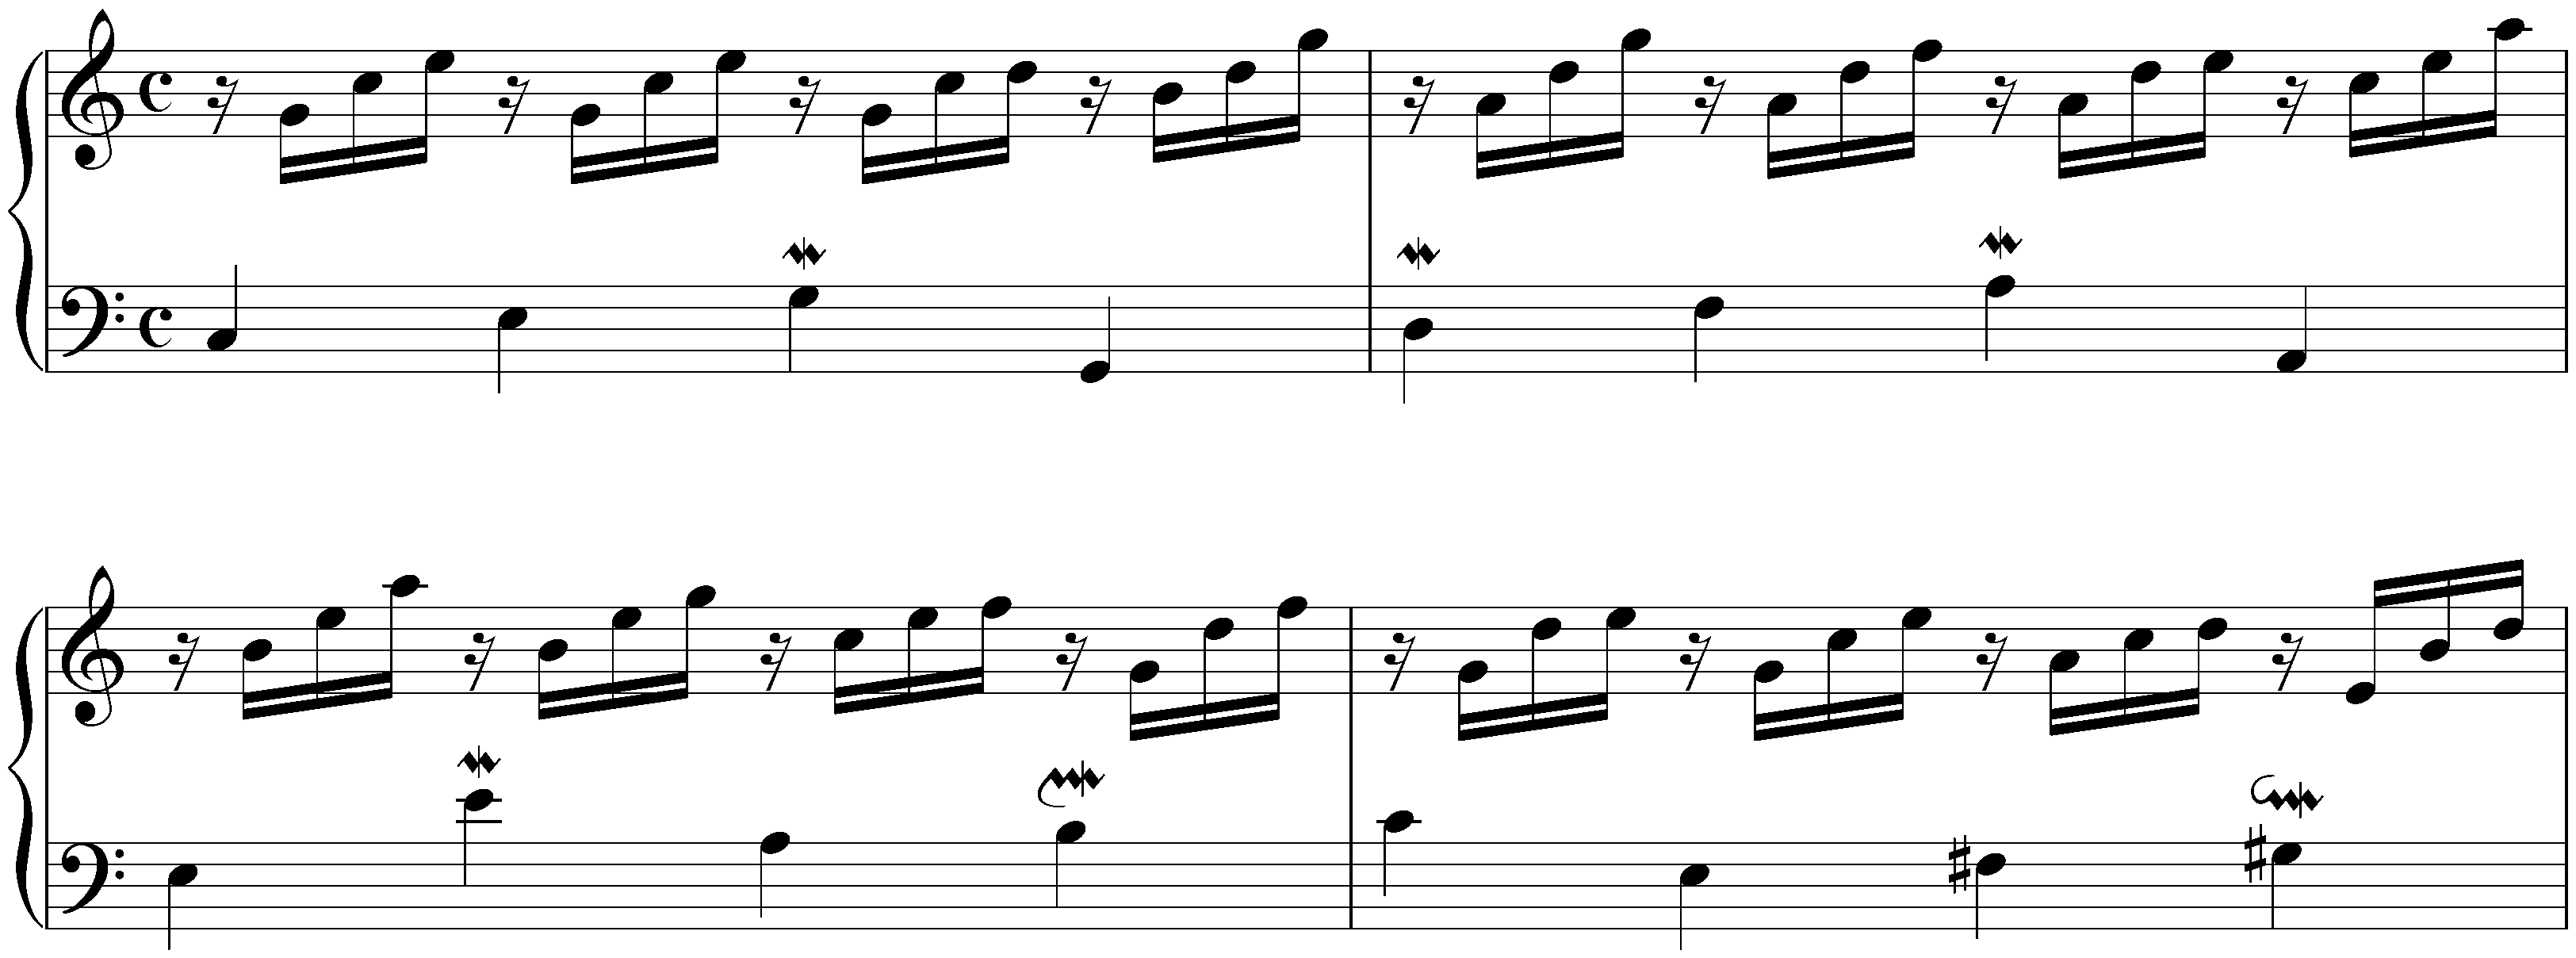 Nine little Preludes from the Notebook for Wilhelm Friedemann Bach, BWV 924–932; 1. C major, BWV 924